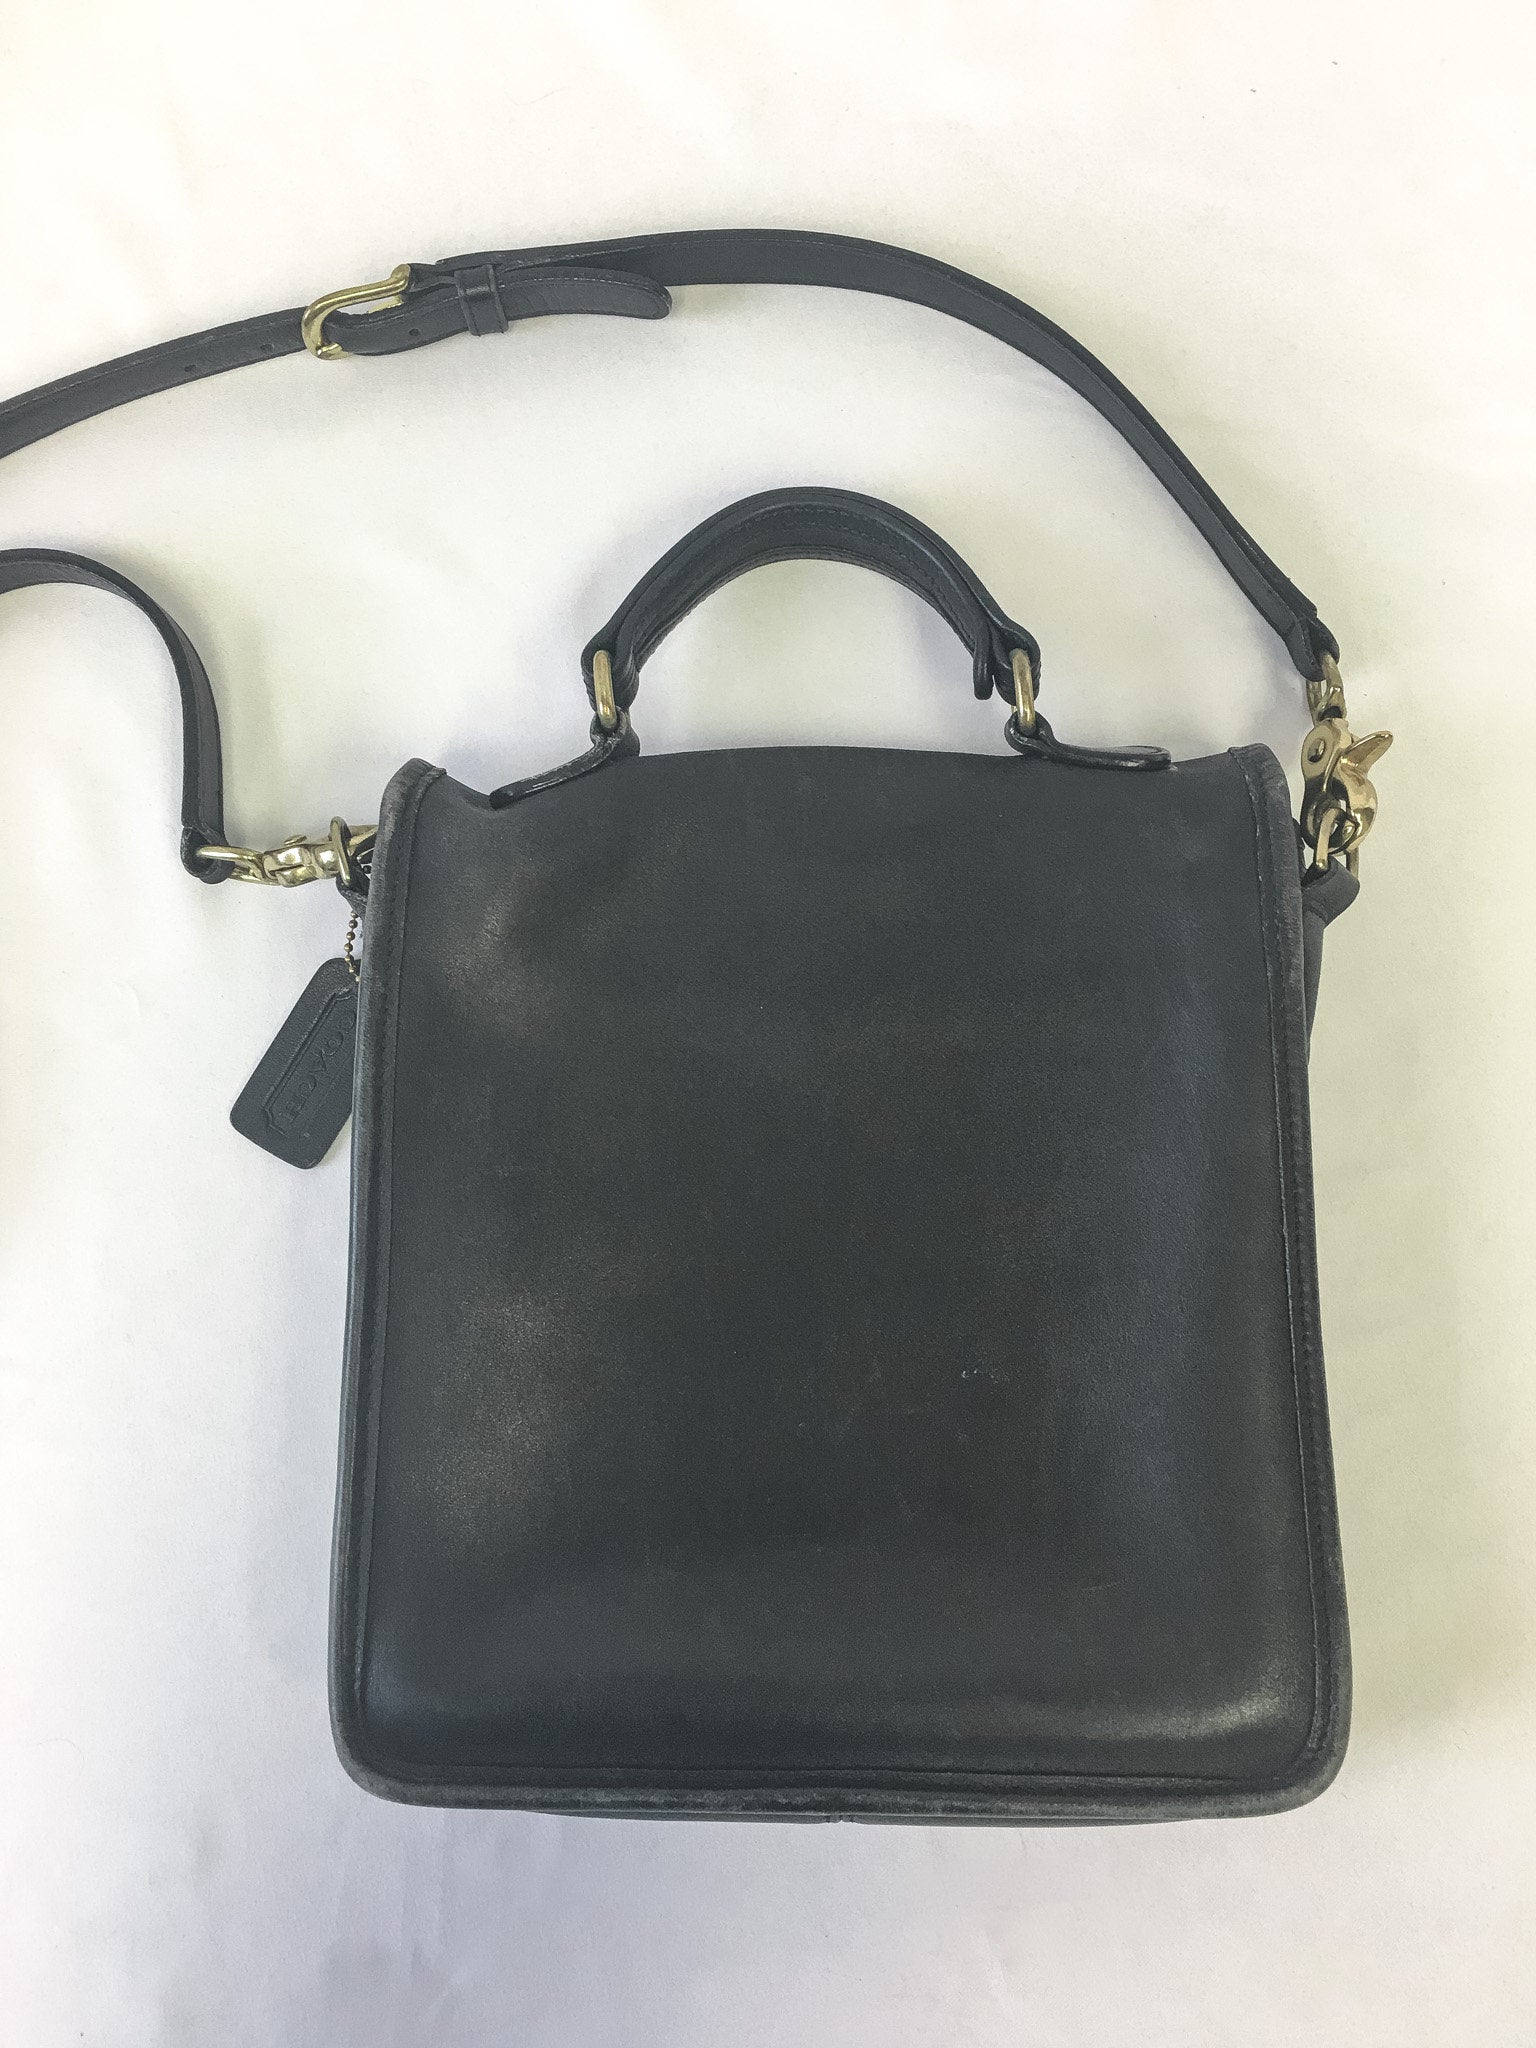 Vintage 90s COACH Dark Gray Station Crossbody Bag with Top Handle, Style #5130, 90s Coach Handbag